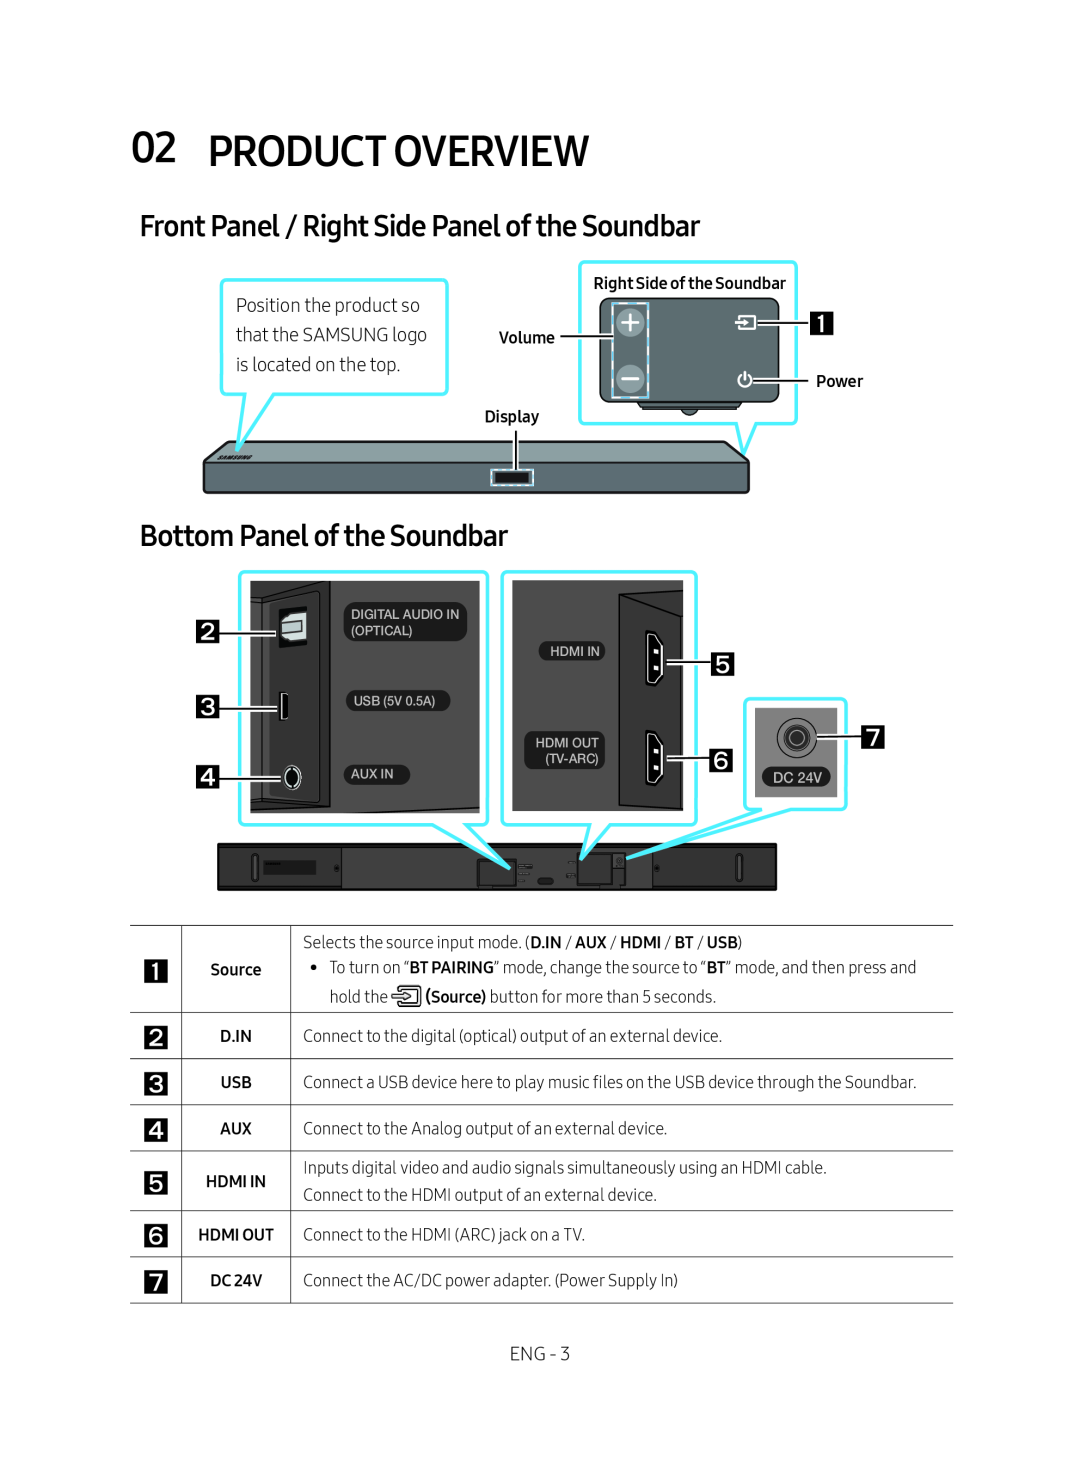 Front Panel / Right Side Panel of the Soundbar Standard HW-MM55